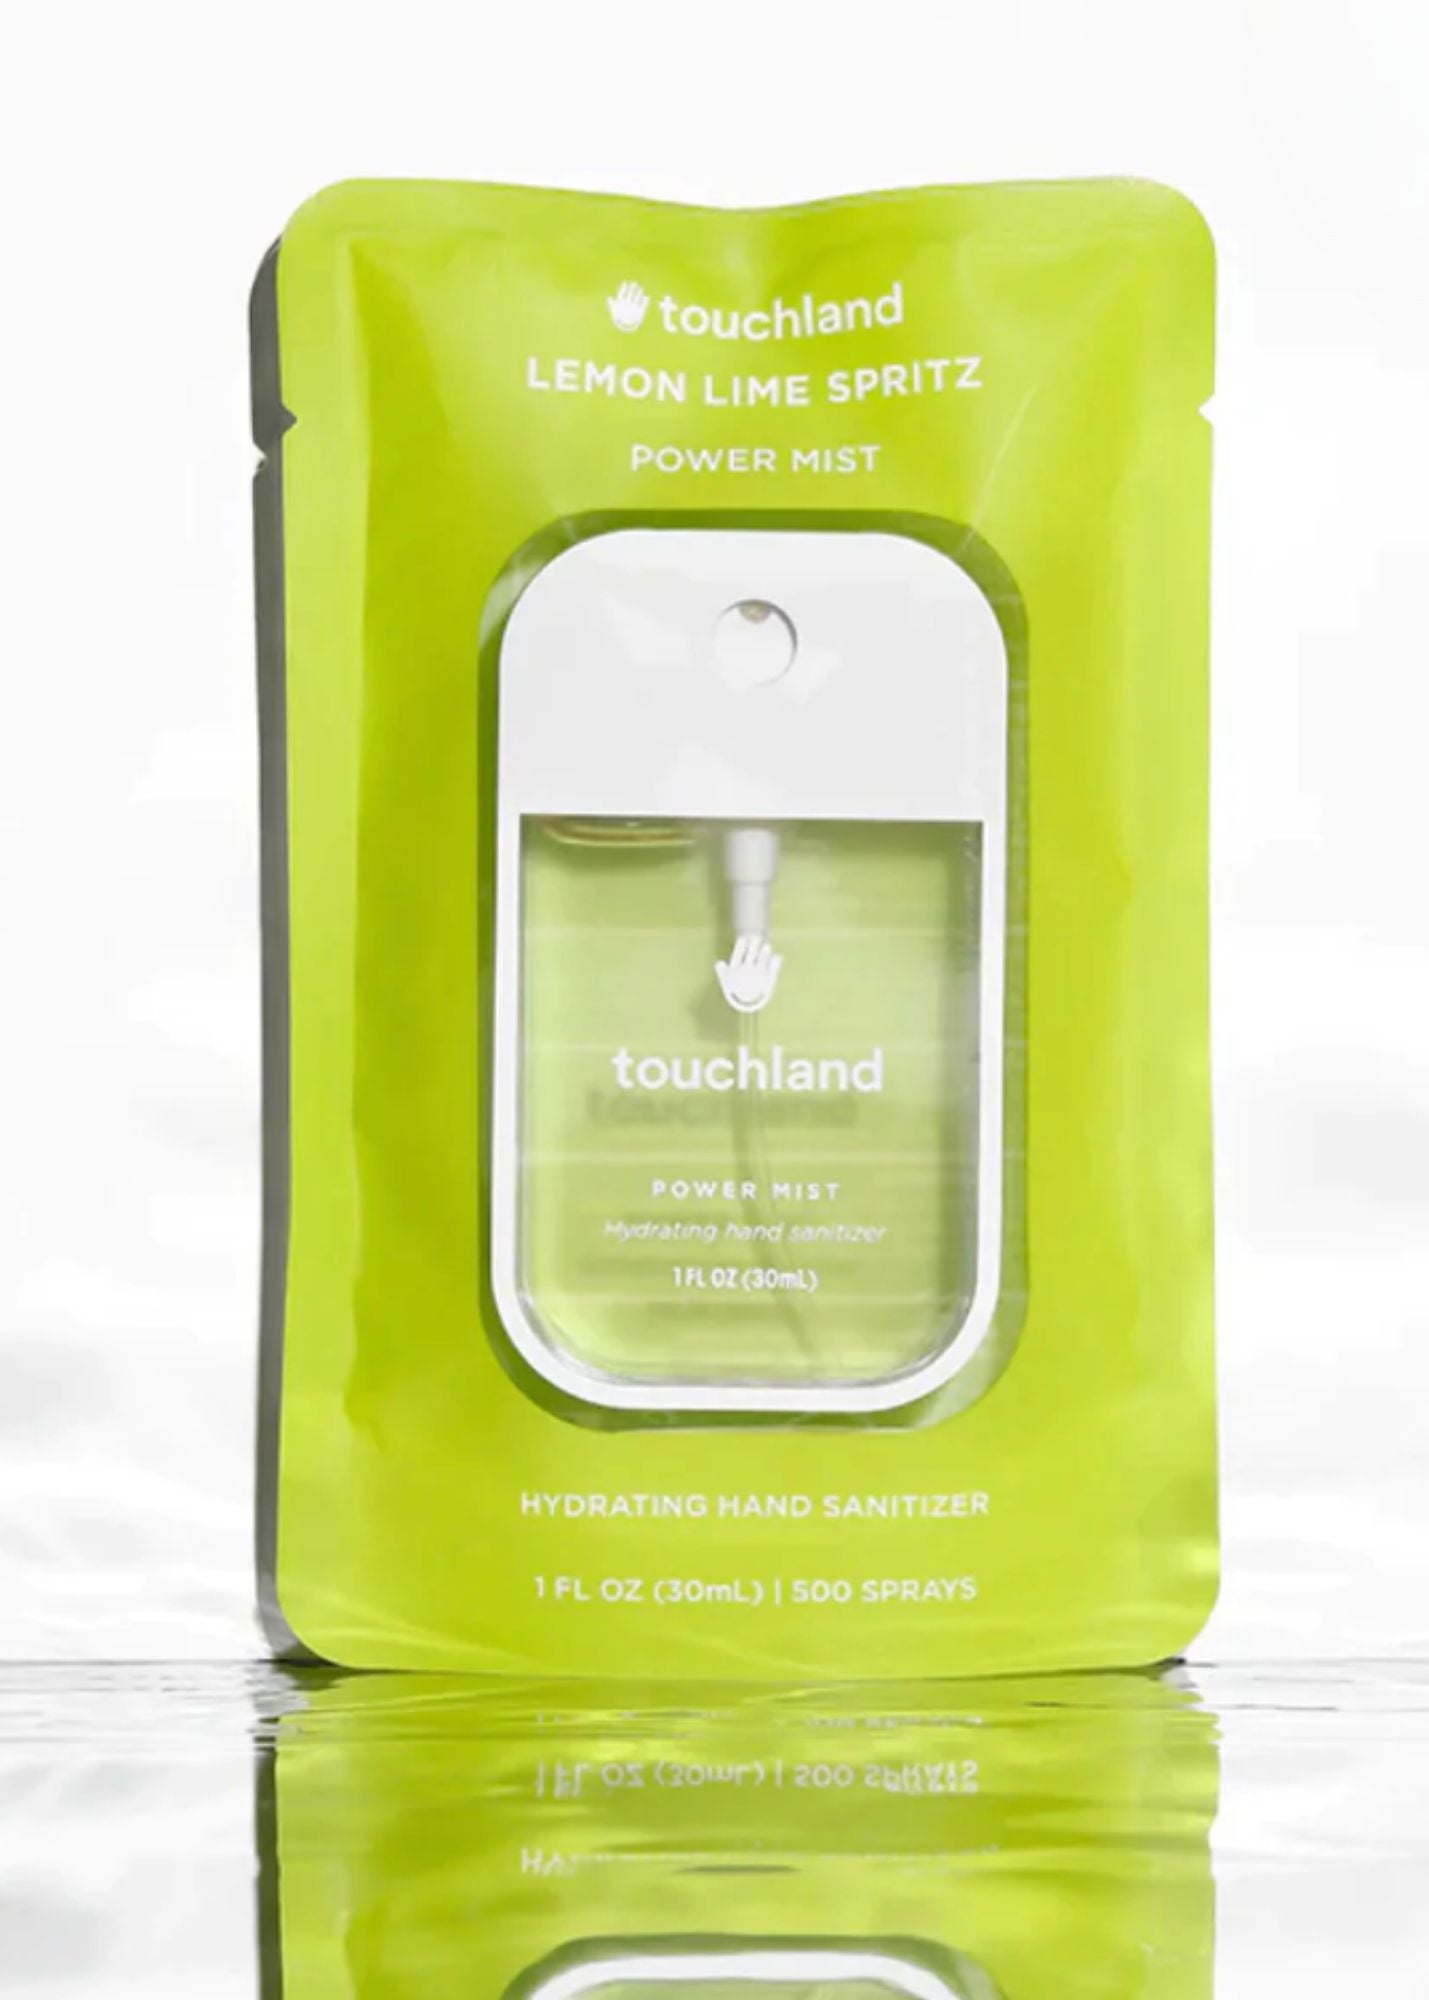 Touchland Power Mist Hand Sanitizer Gifts Lemon Lime Spritz